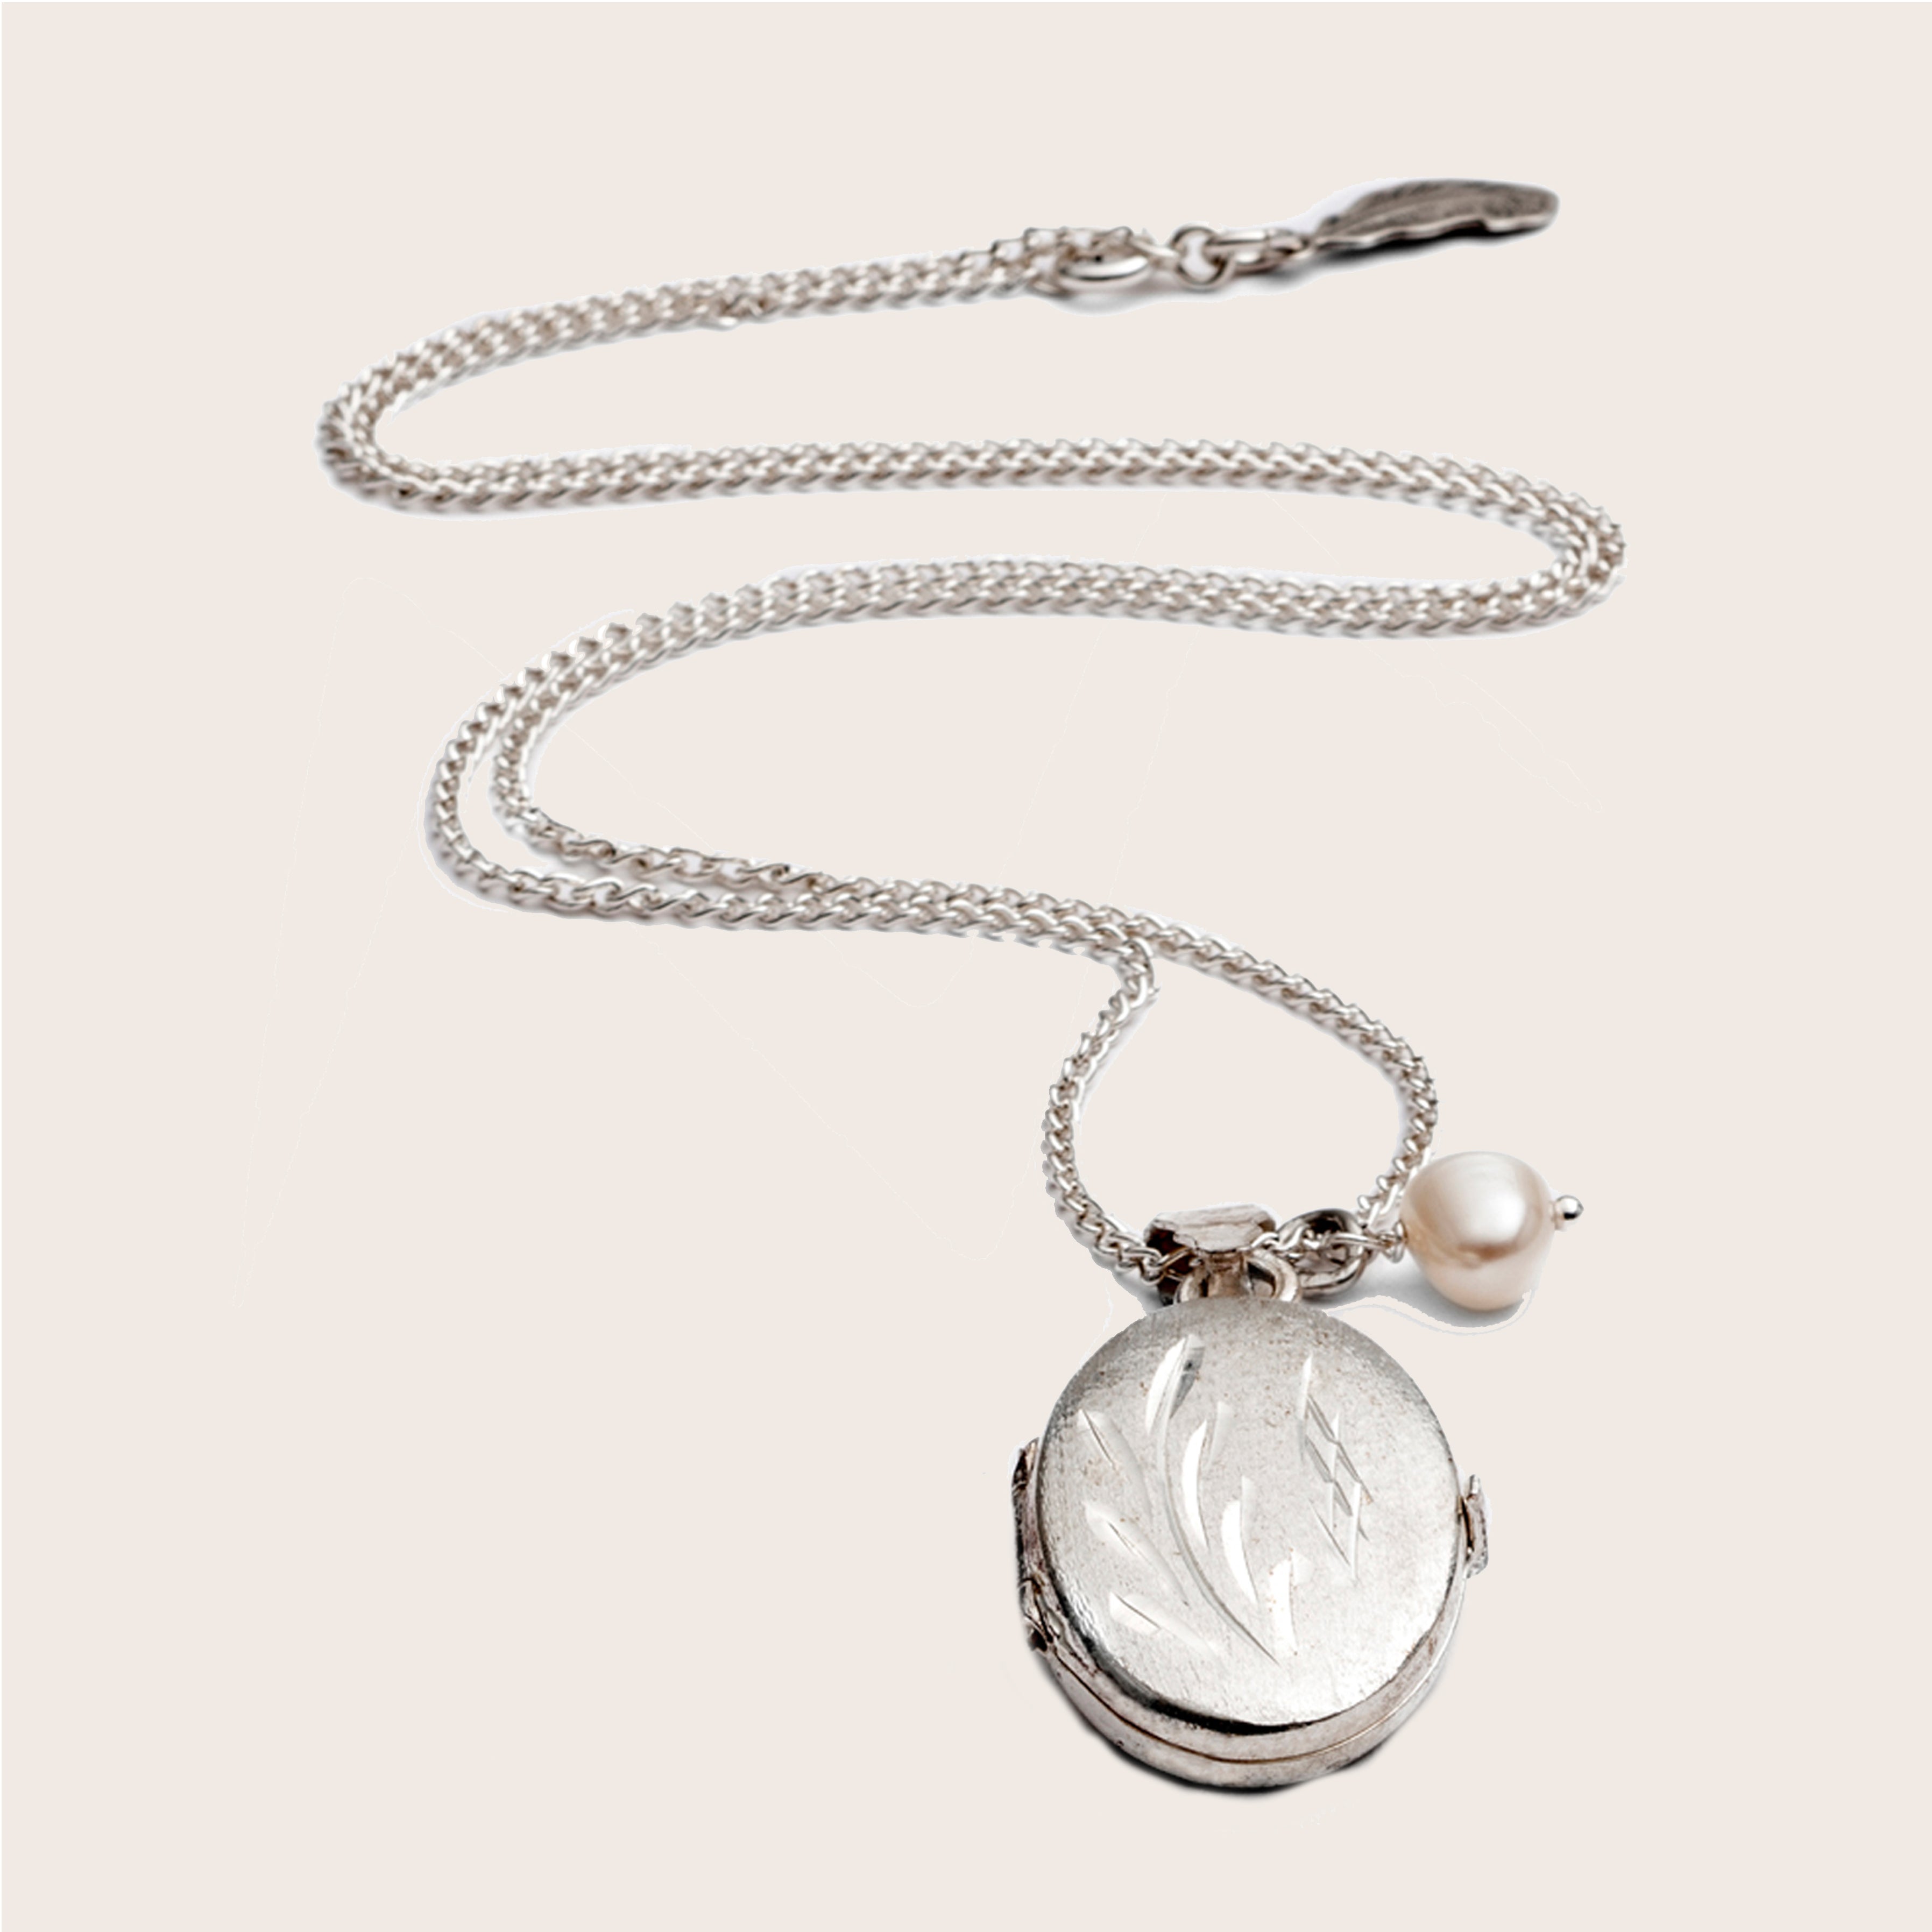 Locket Necklace with Charm - harryrockslondon